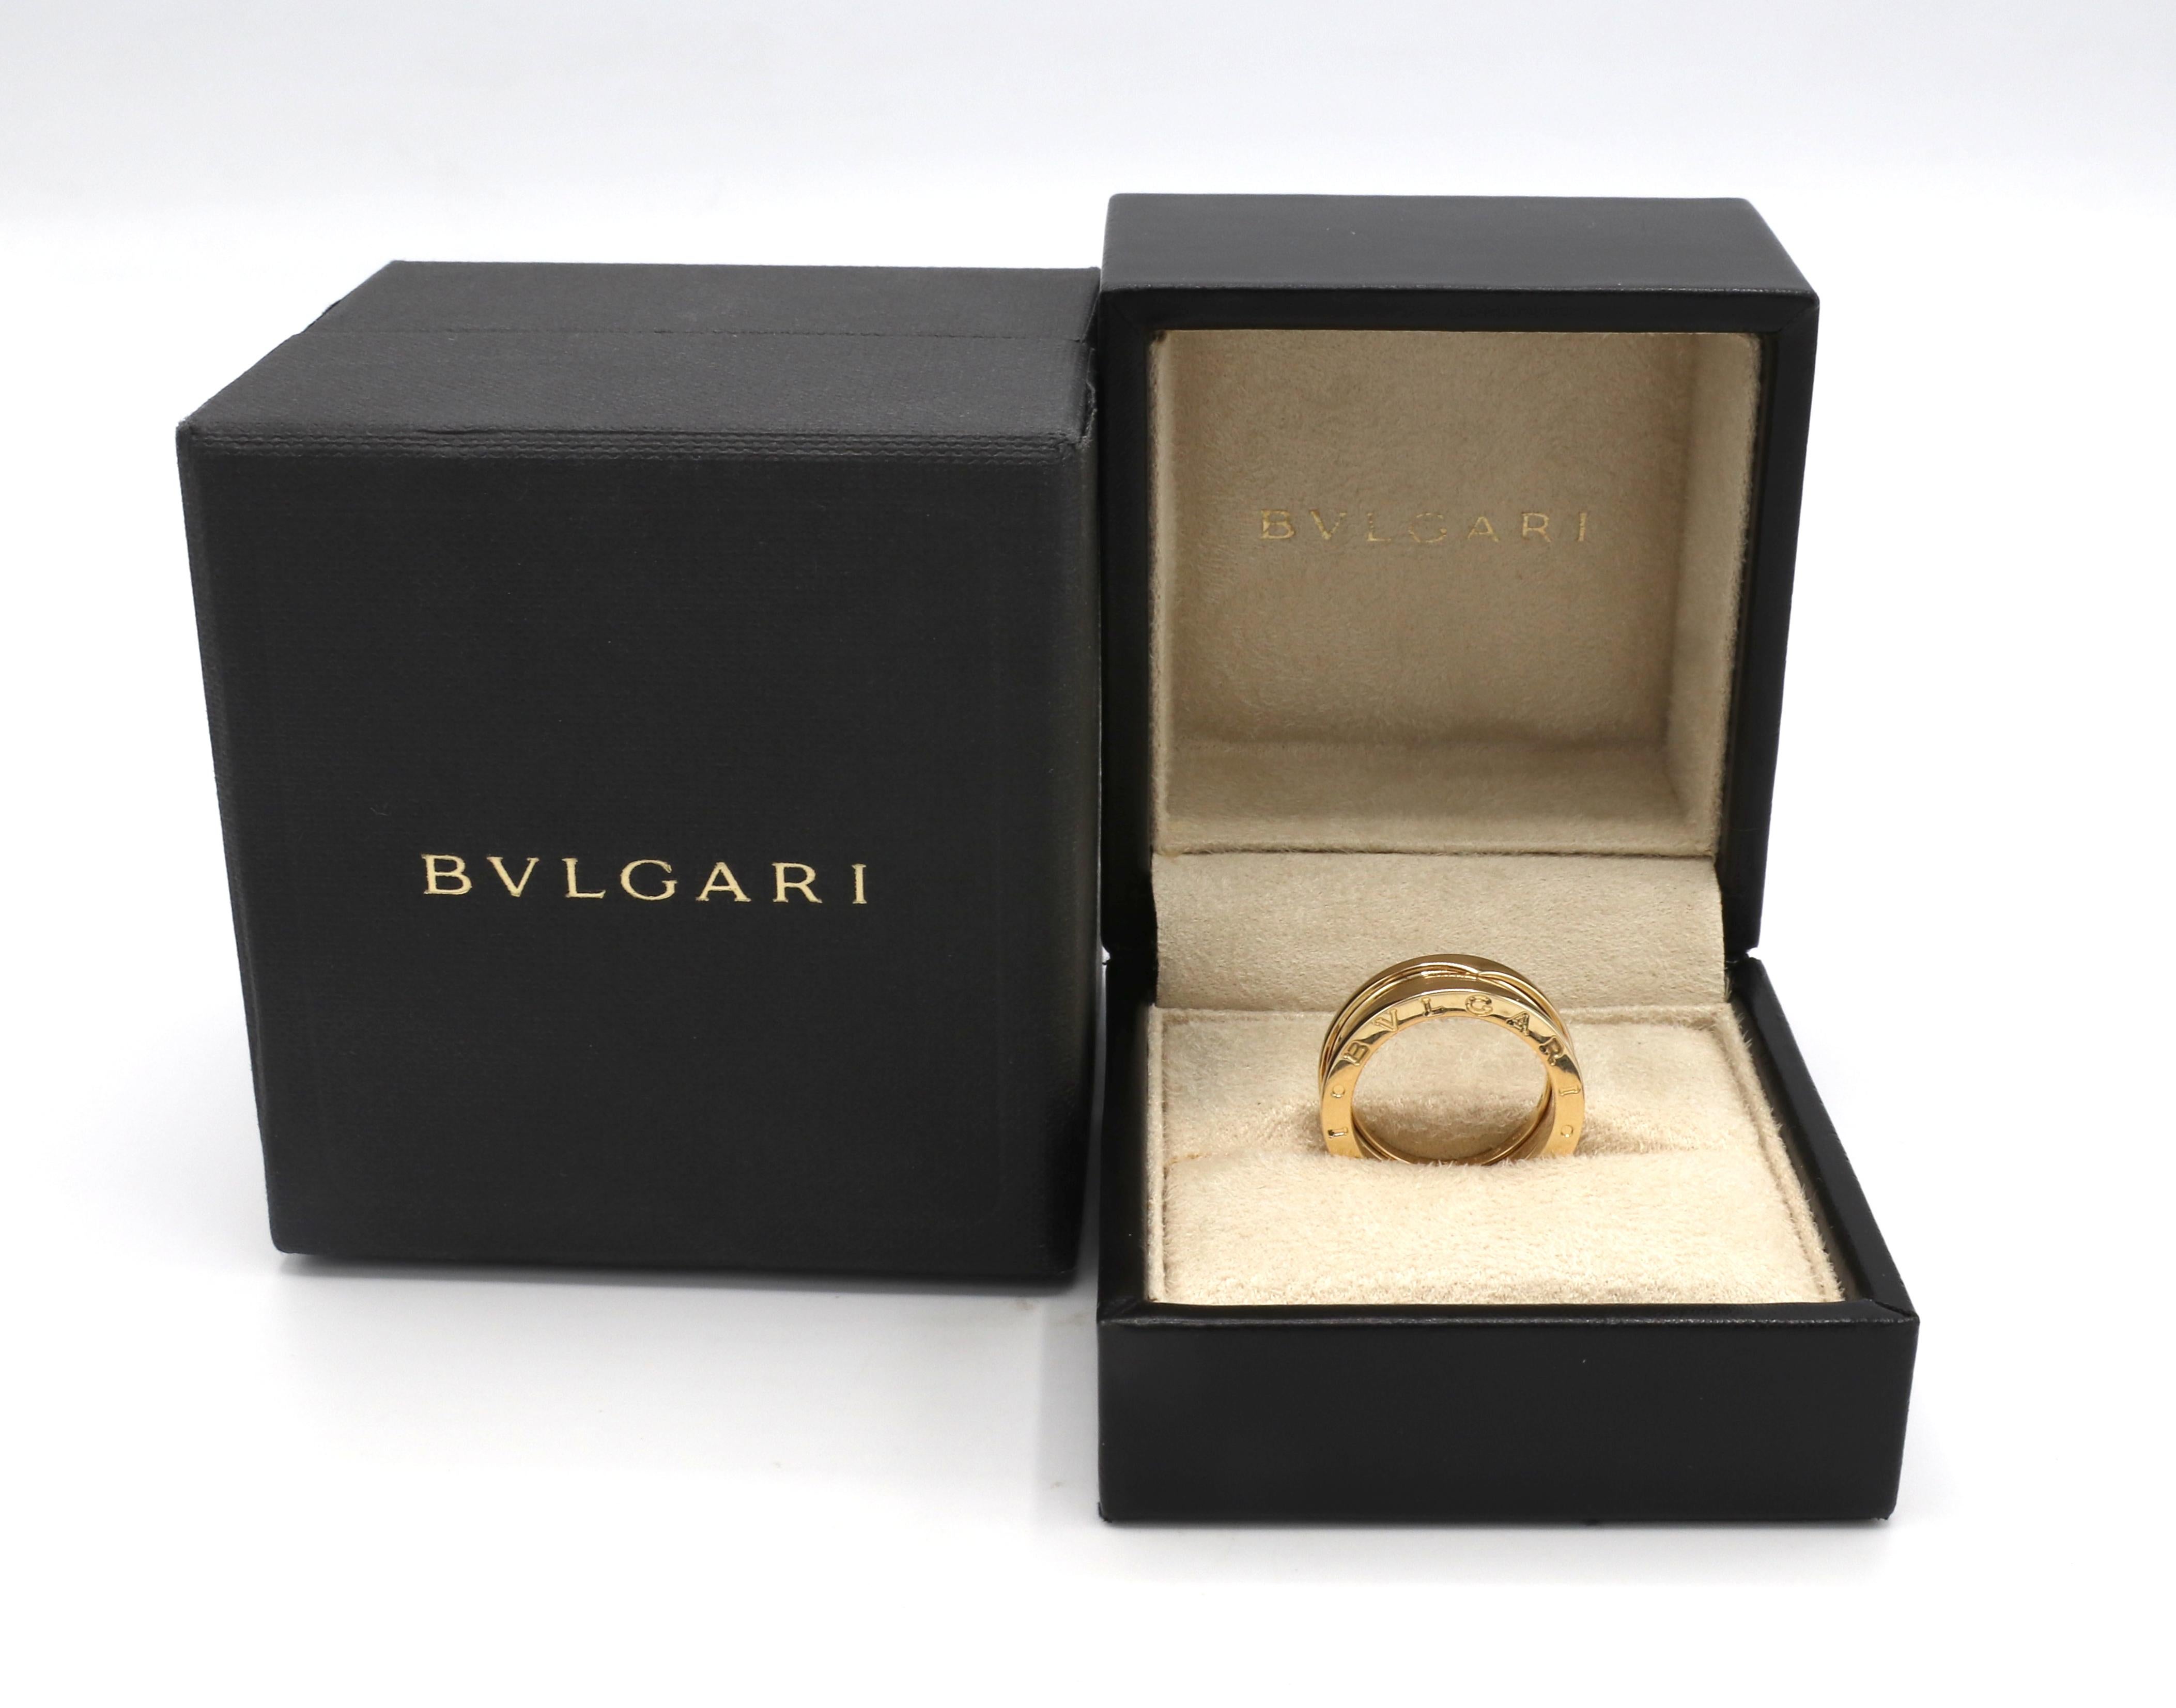 Bulgari B.Zero 1. 18 Karat Yellow Gold Three Band Ring 
Metal: 18k yellow gold
Weight: 9.92 grams
Size: 51 (5.75 US)
Width: 9mm (flexible)
Retail: $2720 USD
